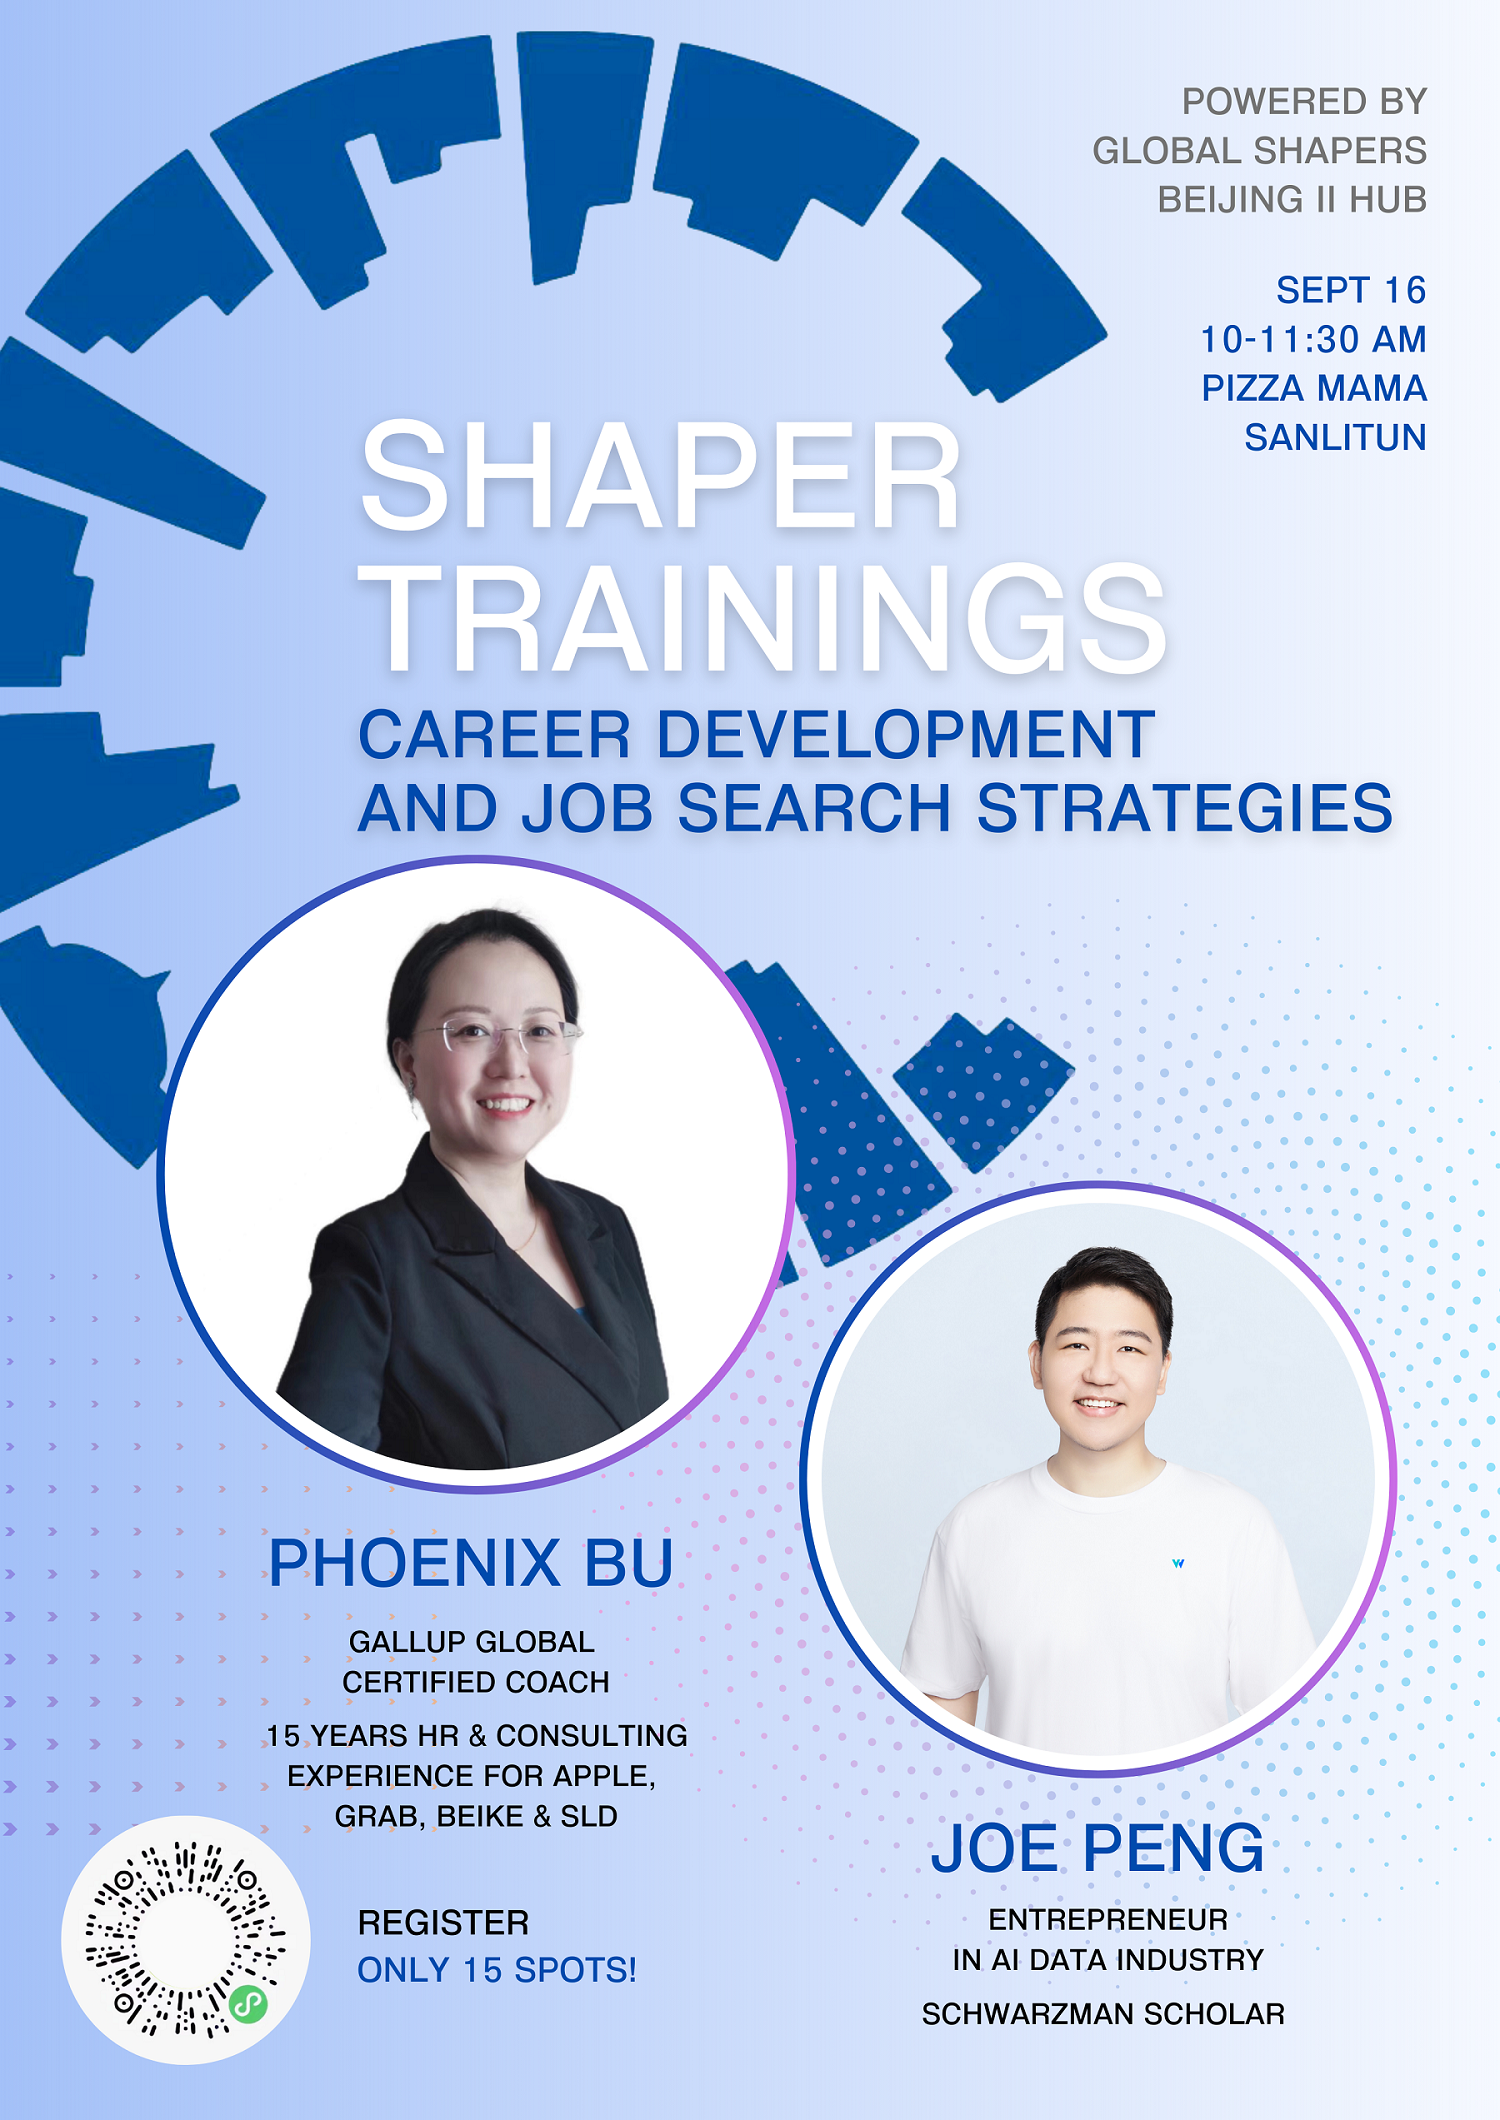 Shaper Training on Career Development and Job Search Strategies